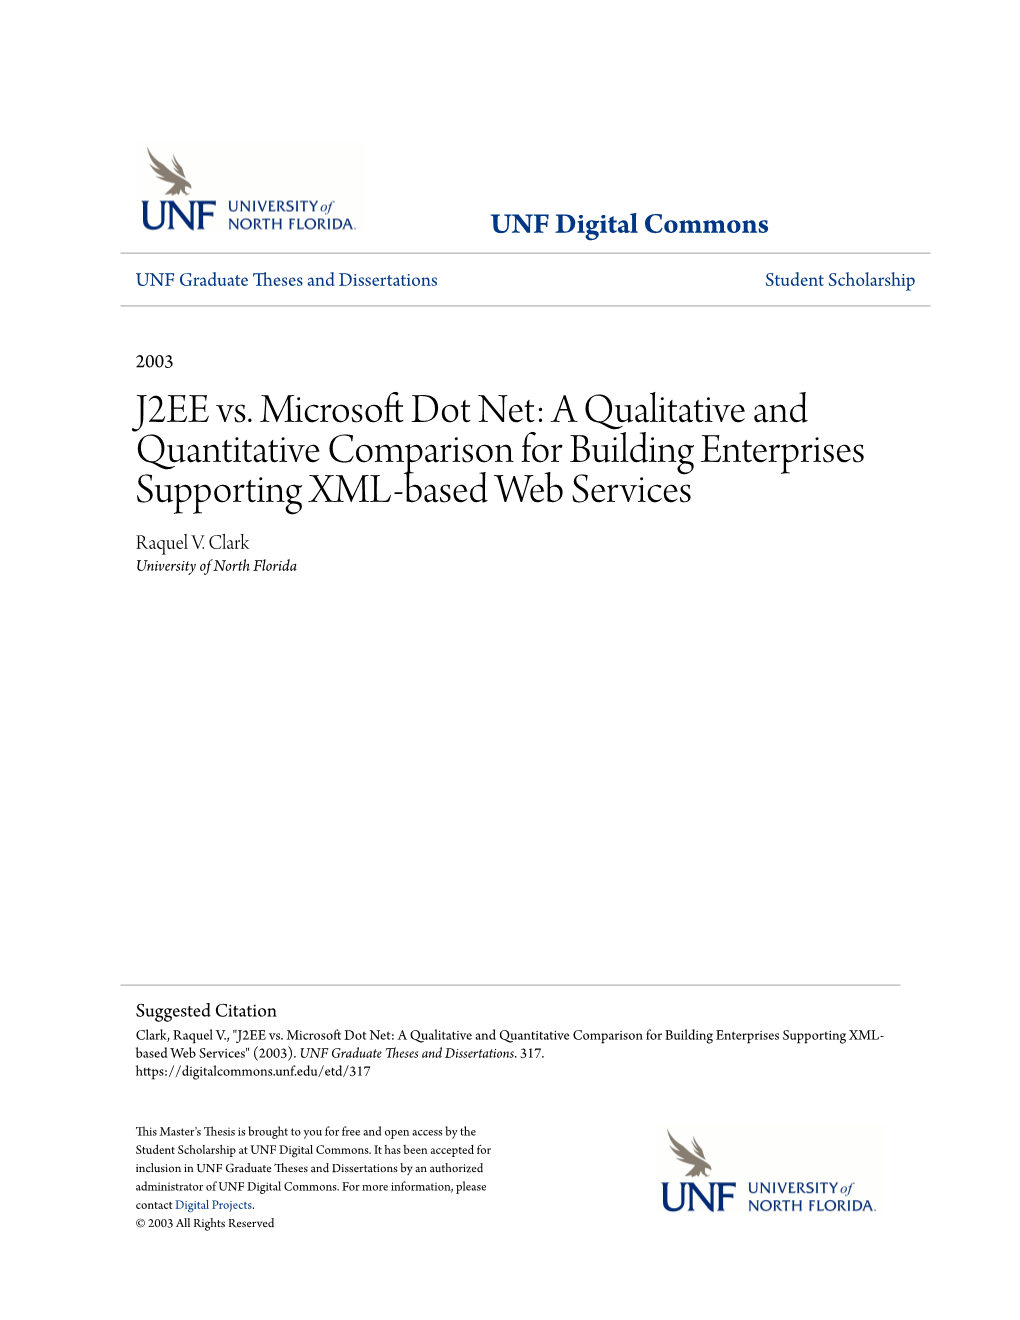 J2ee Vs. Microsoft Dot Net a Qualitative and Quantitative Comparison for Building Enterprises Supporting Xml-Based Web Services